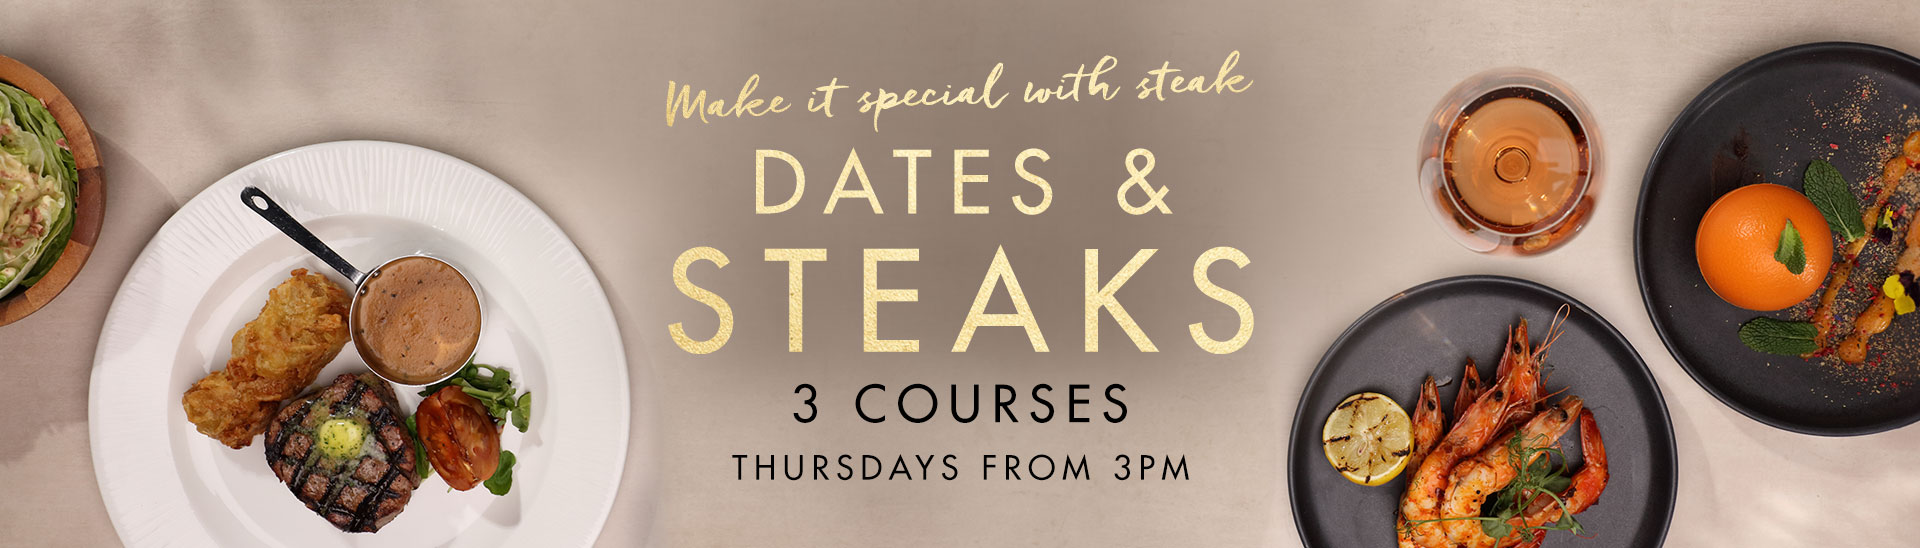 Dates & Steaks at Miller & Carter Edinburgh City